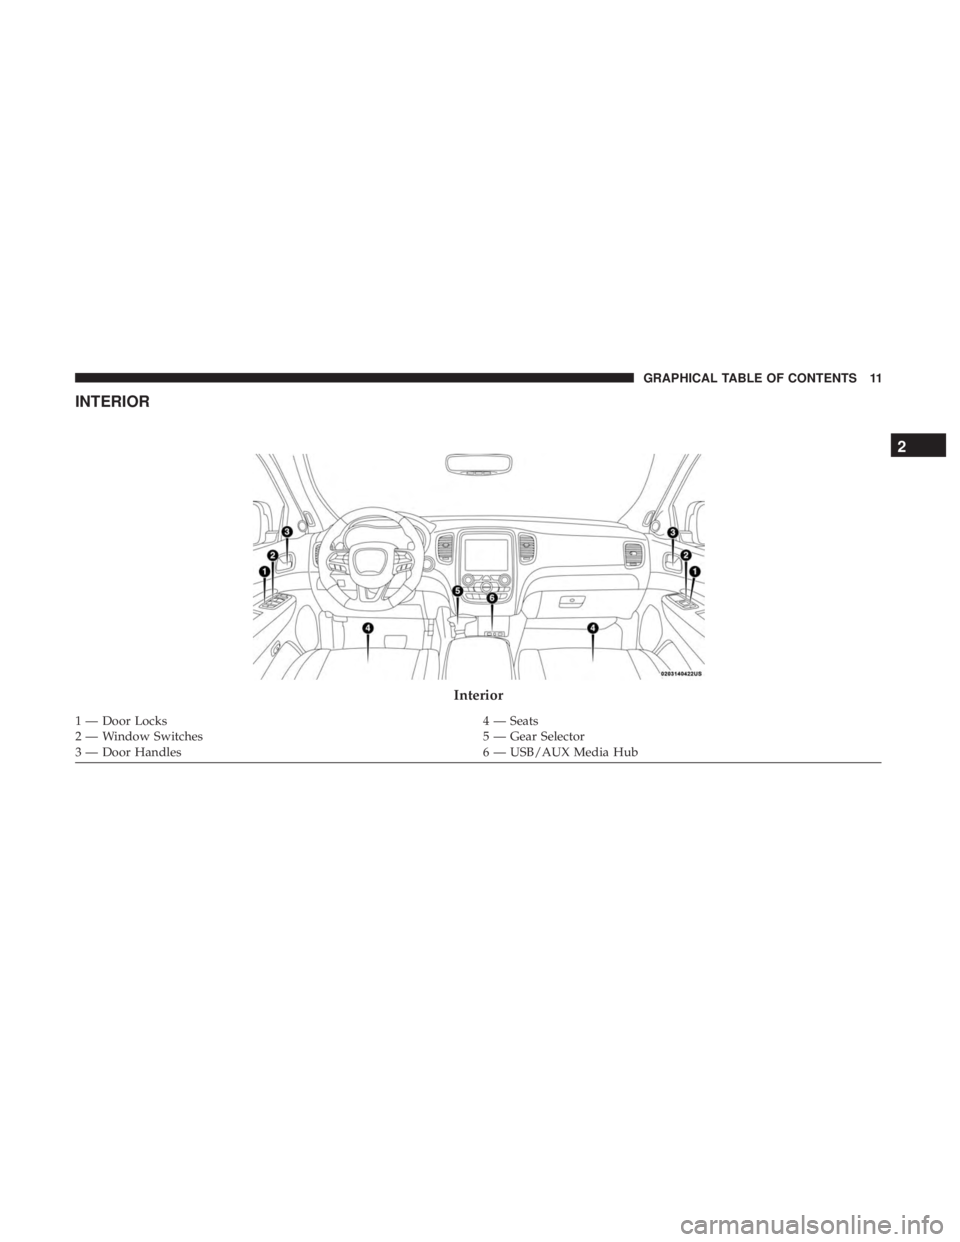 DODGE DURANGO SRT 2019  Owners Manual INTERIOR
Interior
1 — Door Locks4 — Seats
2 — Window Switches 5 — Gear Selector
3 — Door Handles 6 — USB/AUX Media Hub
2
GRAPHICAL TABLE OF CONTENTS 11 